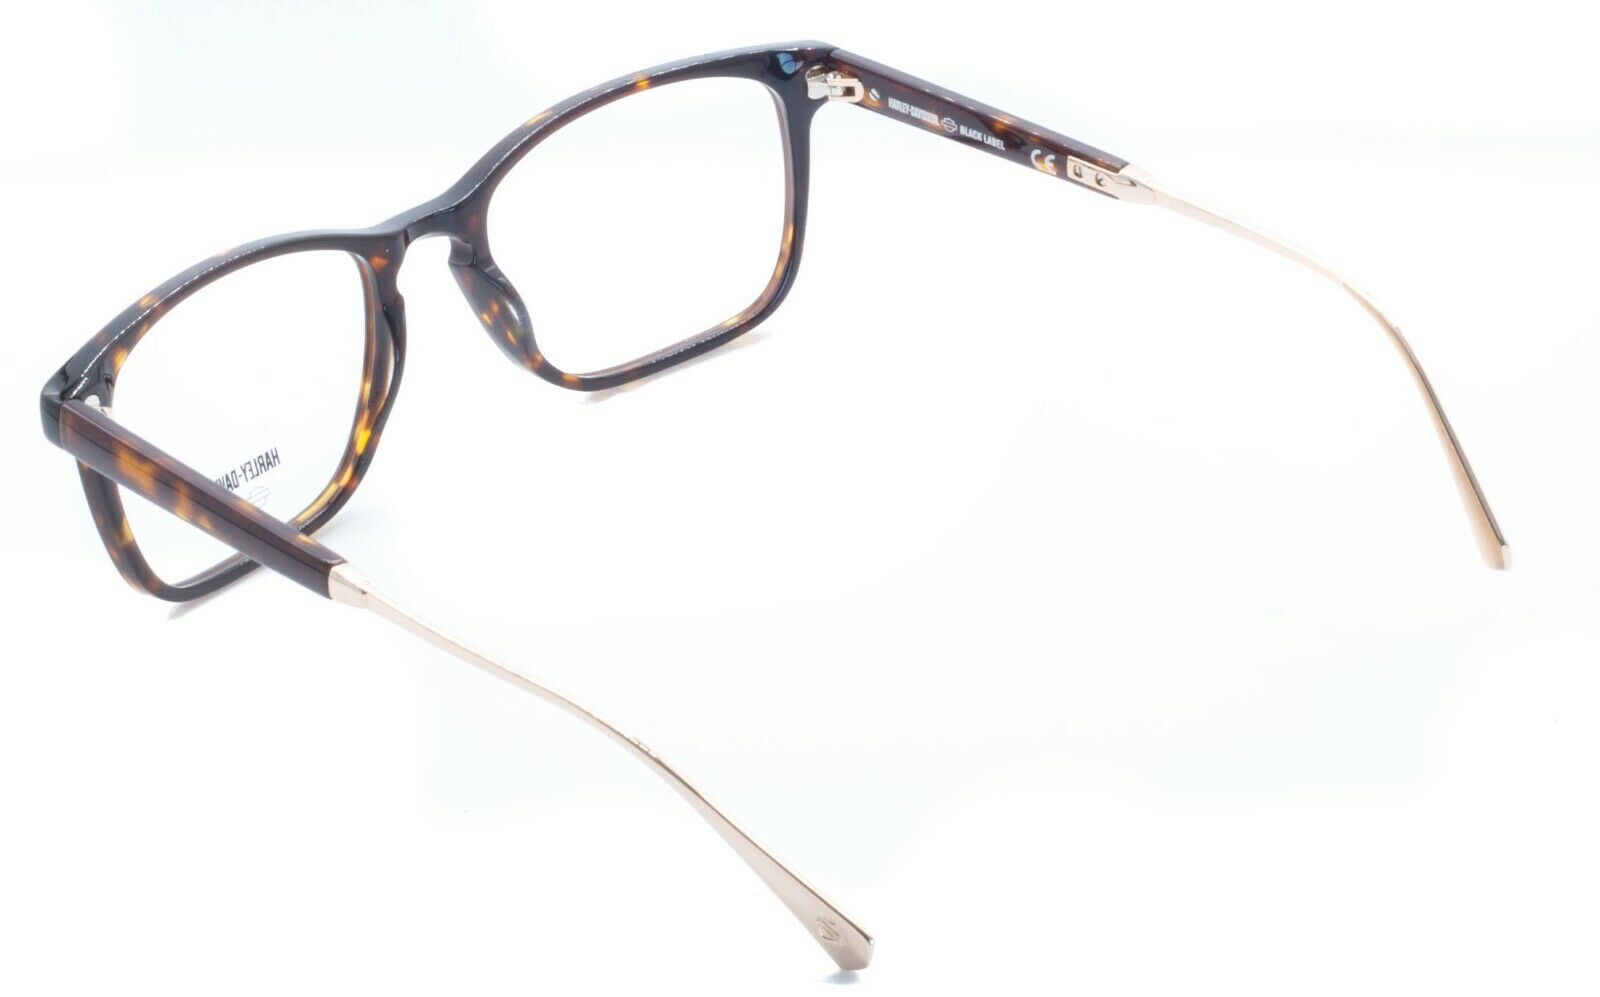 HARLEY-DAVIDSON HD1027 052 54mm Eyewear FRAMES RX Optical Eyeglasses Glasses New